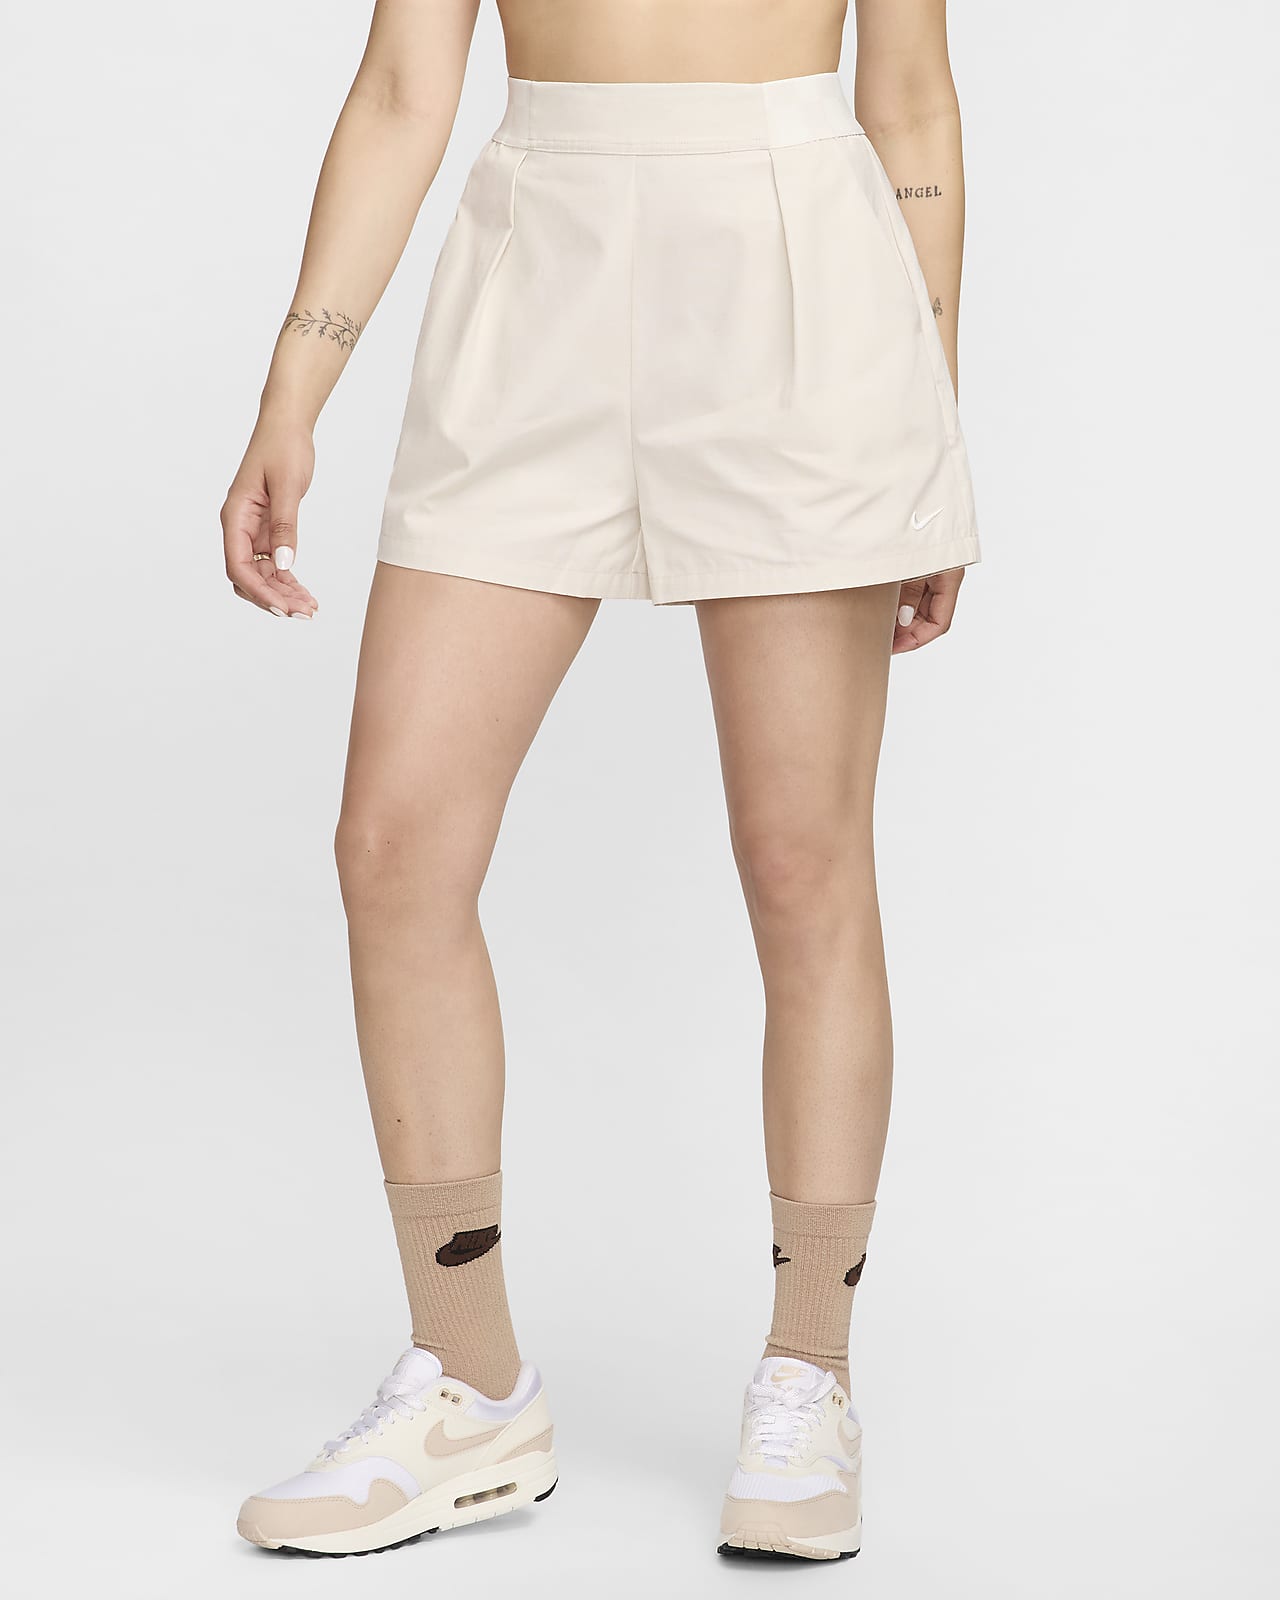 Nike Sportswear Collection magas derekú, 8 cm-es női rövidnadrág